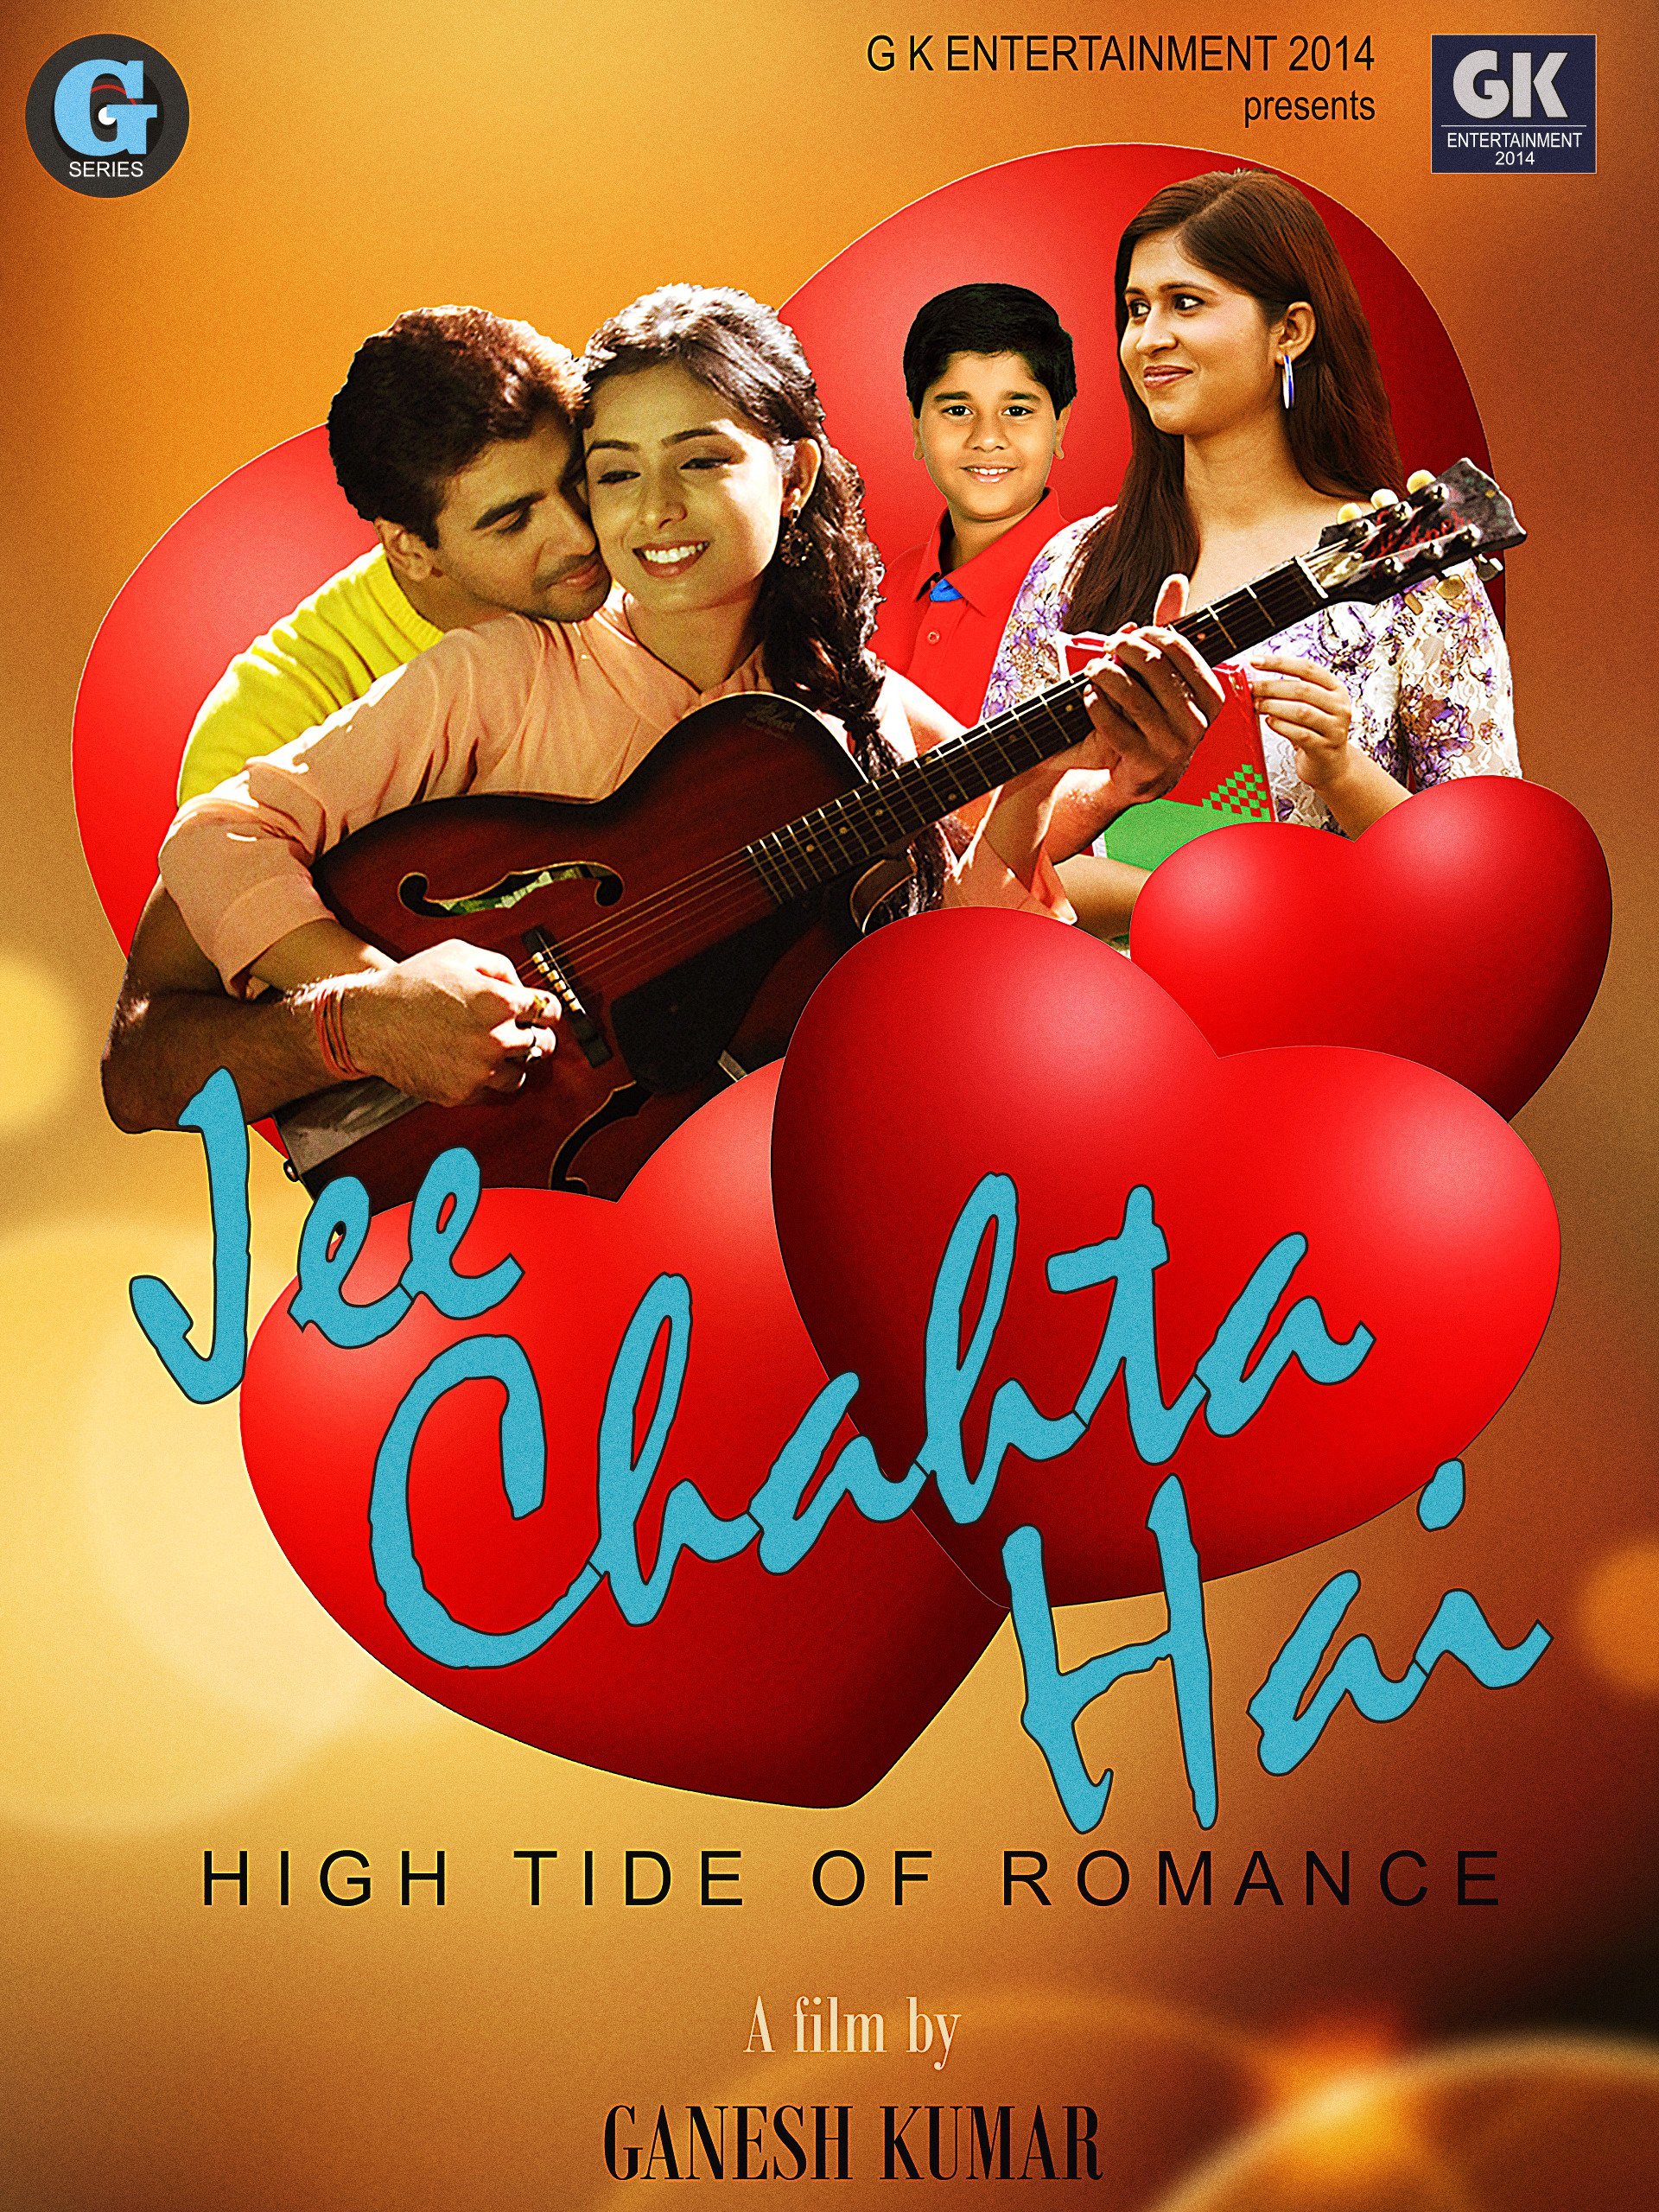 Jee Chahta Hai High Tide Of Romance 2015 Hindi Movie 720p HDRip 900MB Download